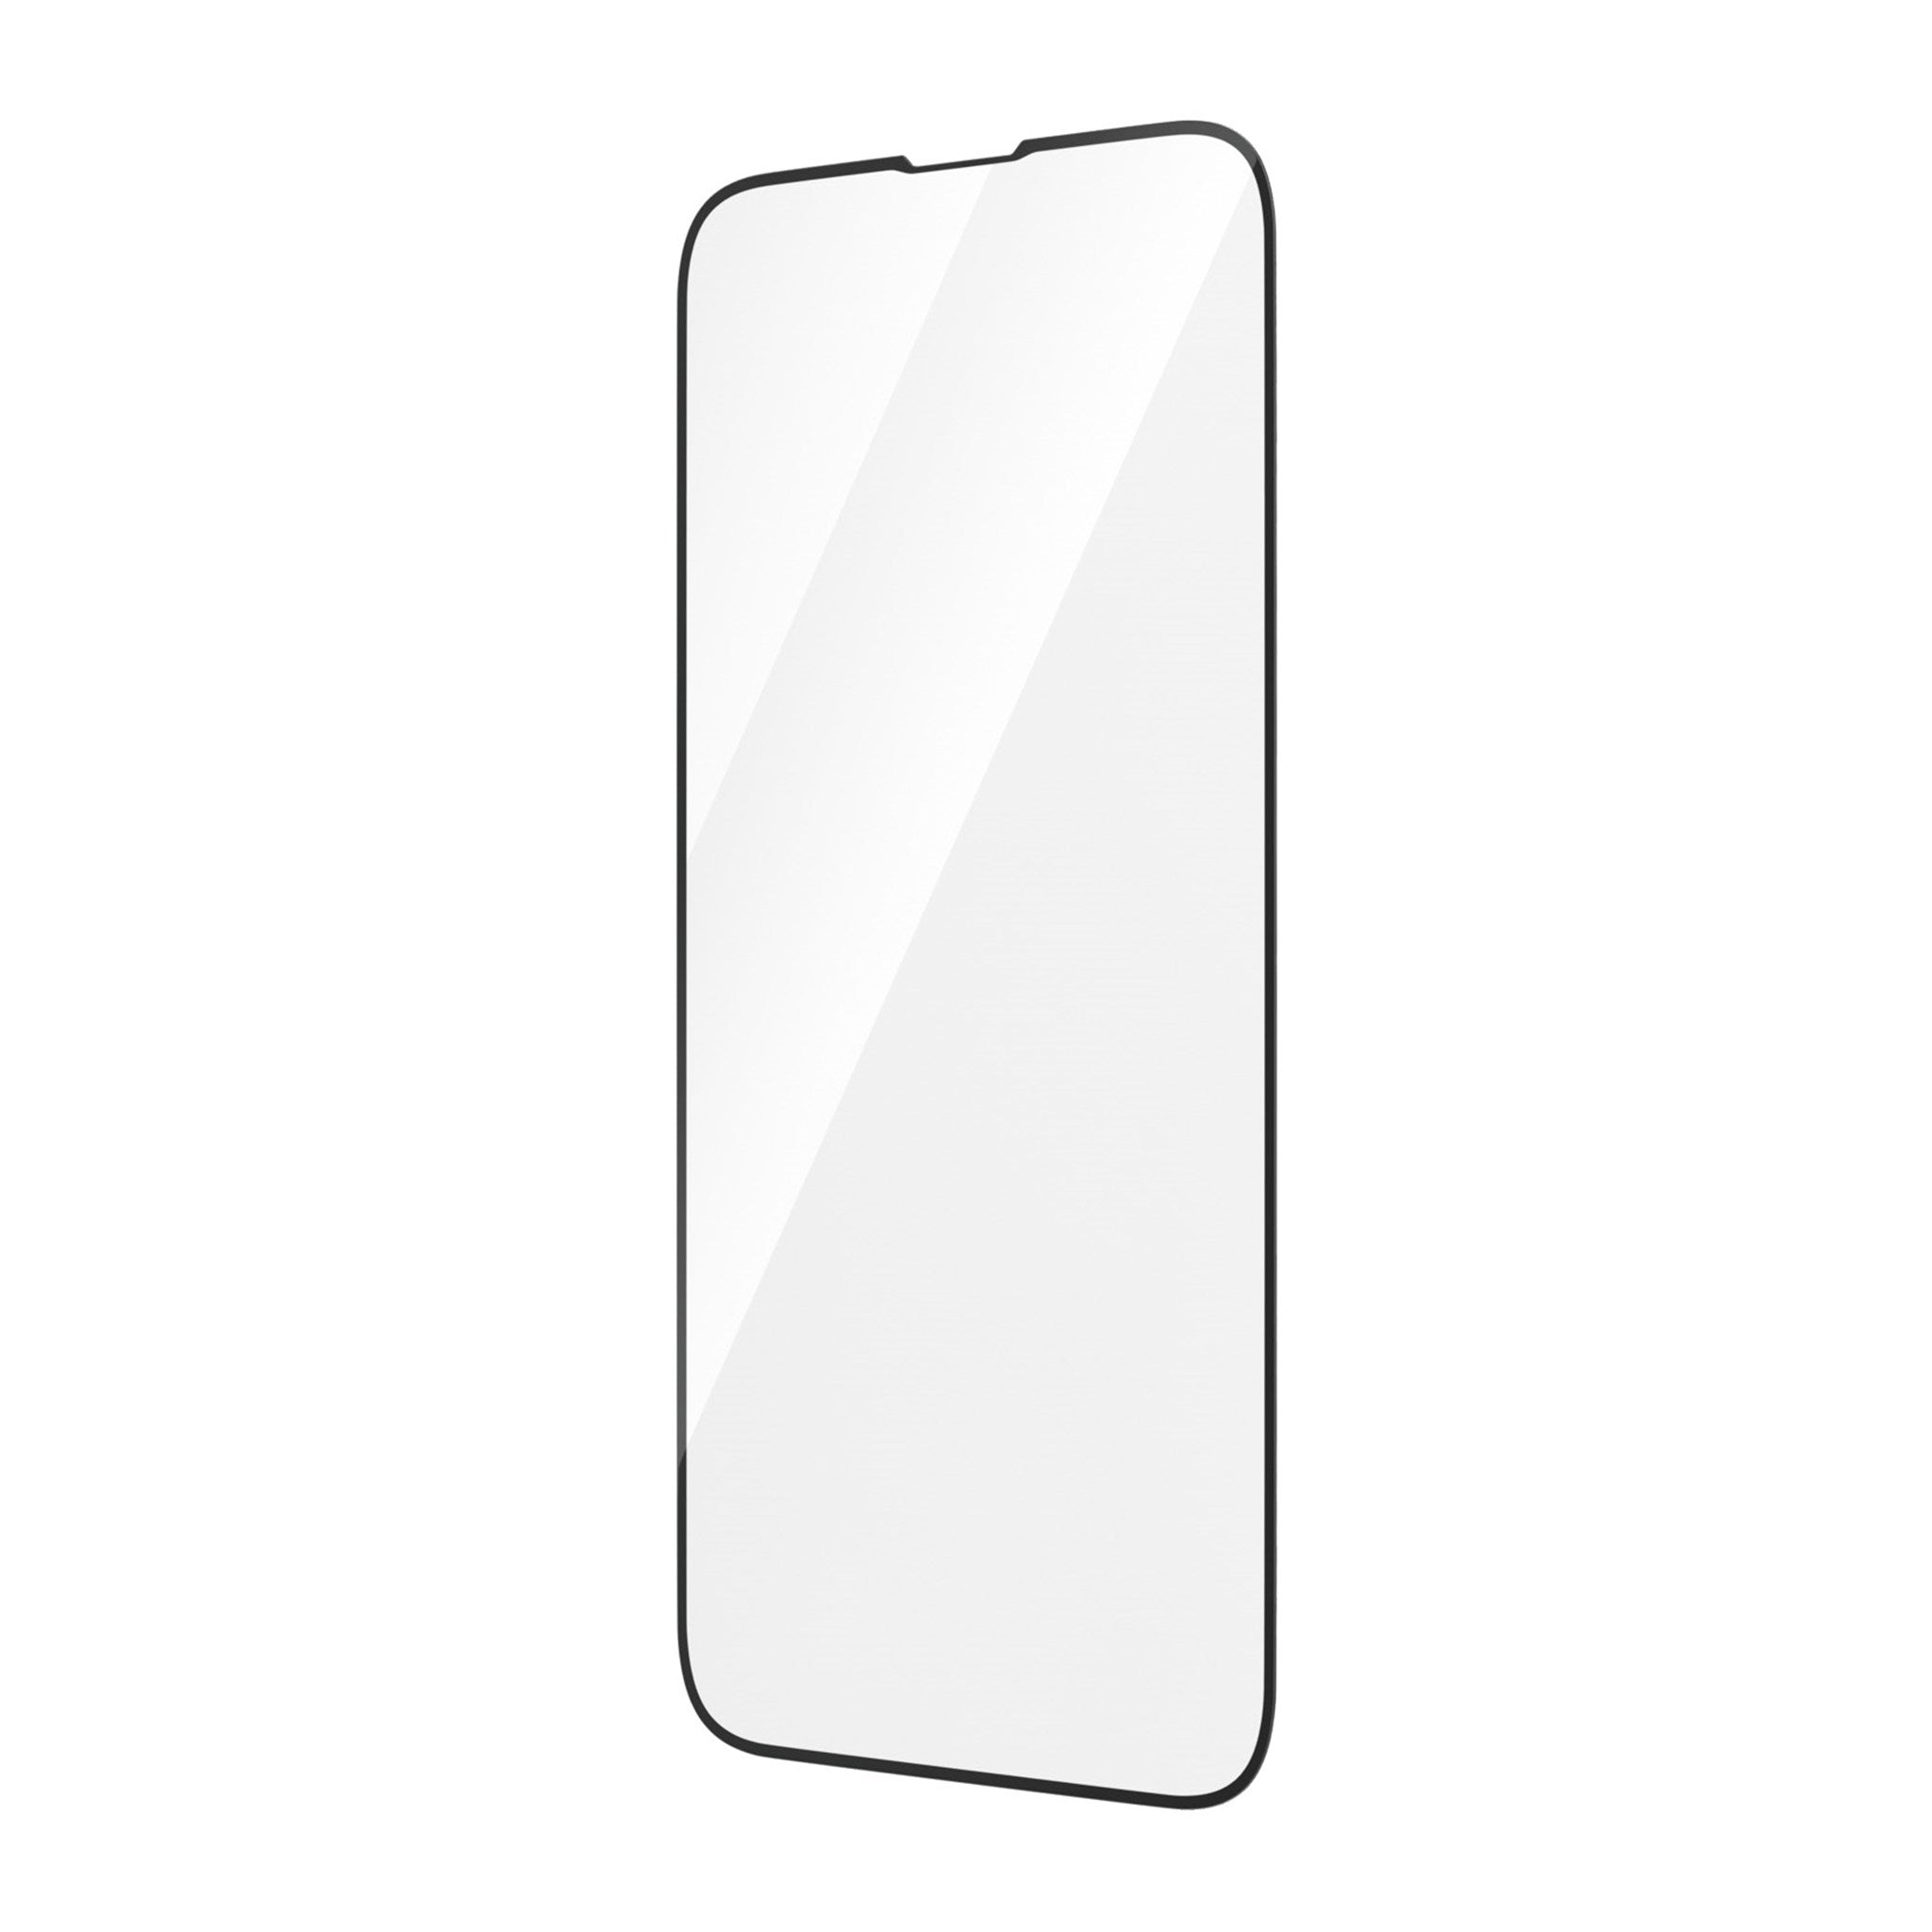 PANZERGLASS Ultra-Wide Fit iPhone | Plus Apple Max) Displayschutz(für 14 Pro iPhone 13